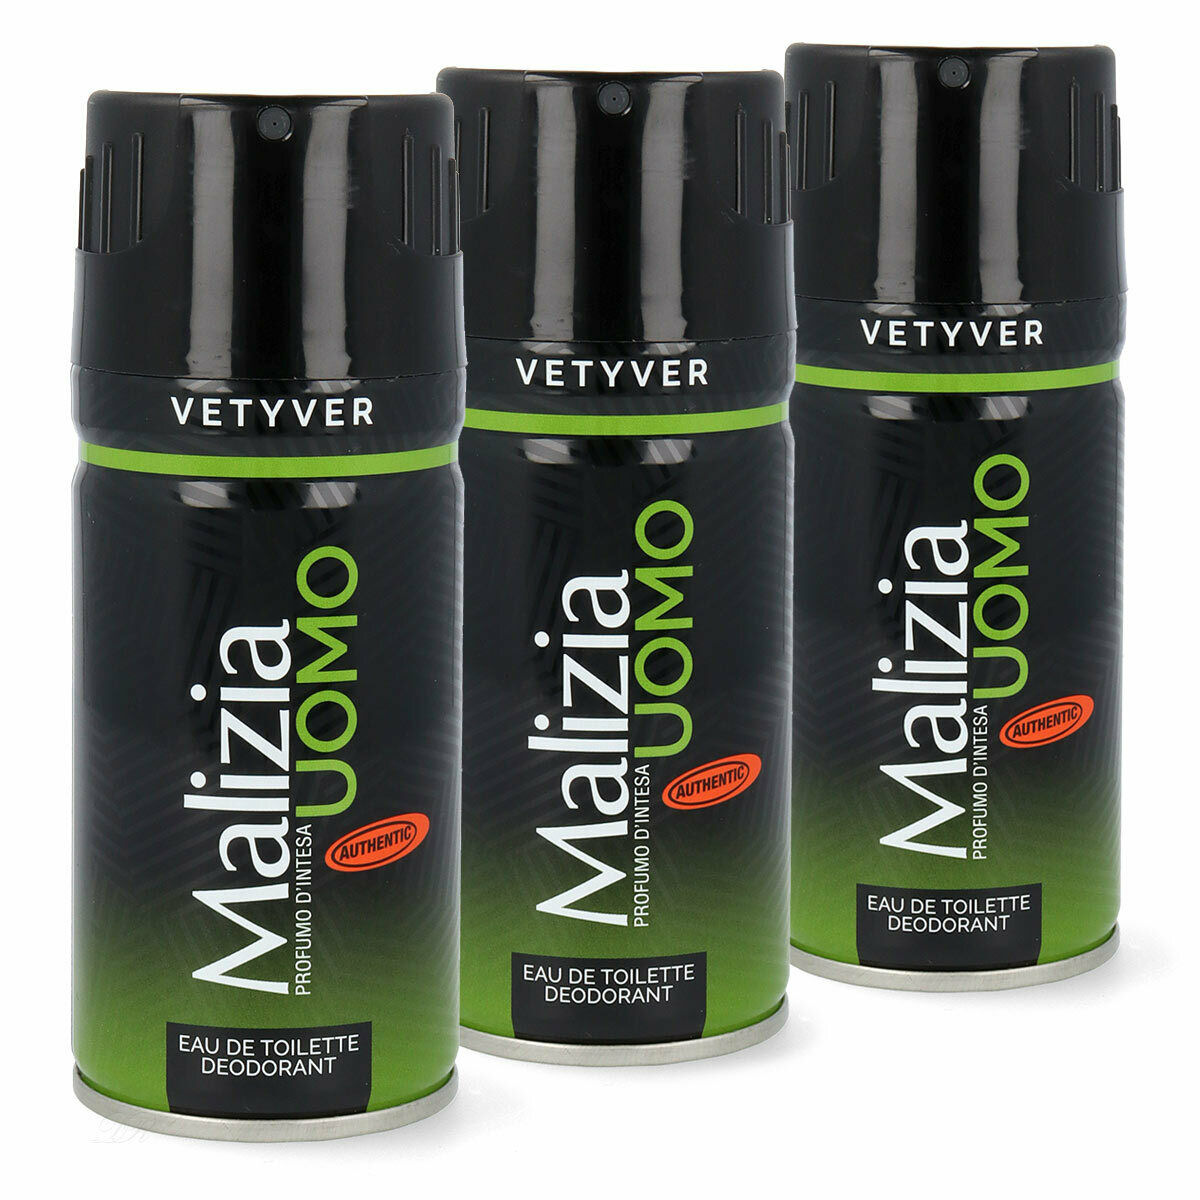 Malizia Uomo Deo Vetyver 3 X150ml Vetiver Deodorant GrÜn Aus Italien